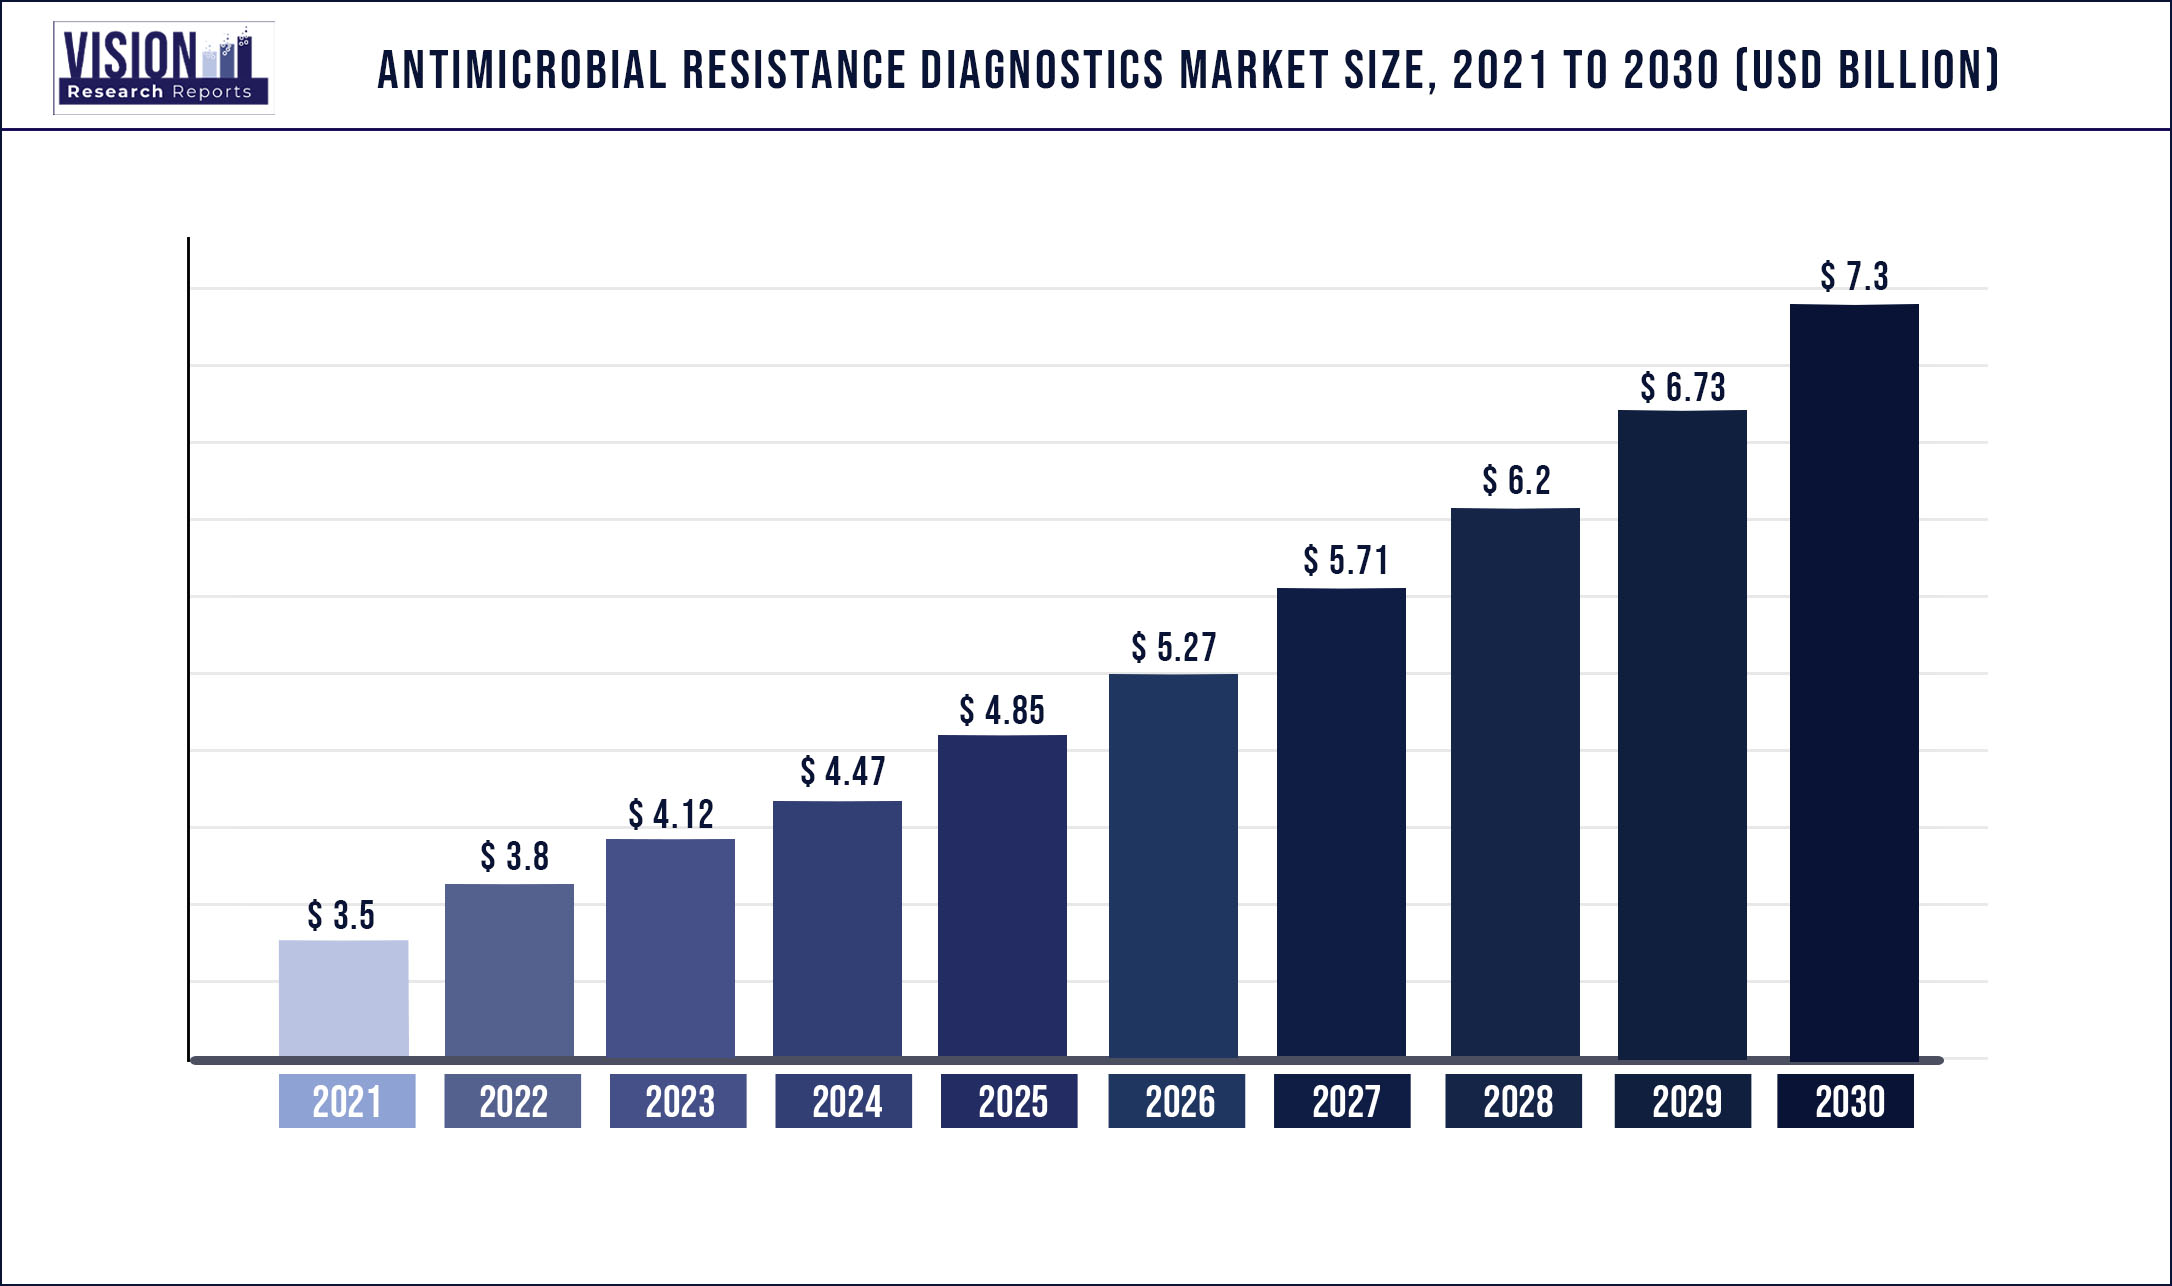 Antimicrobial Resistance Diagnostics Market Size 2021 to 2030